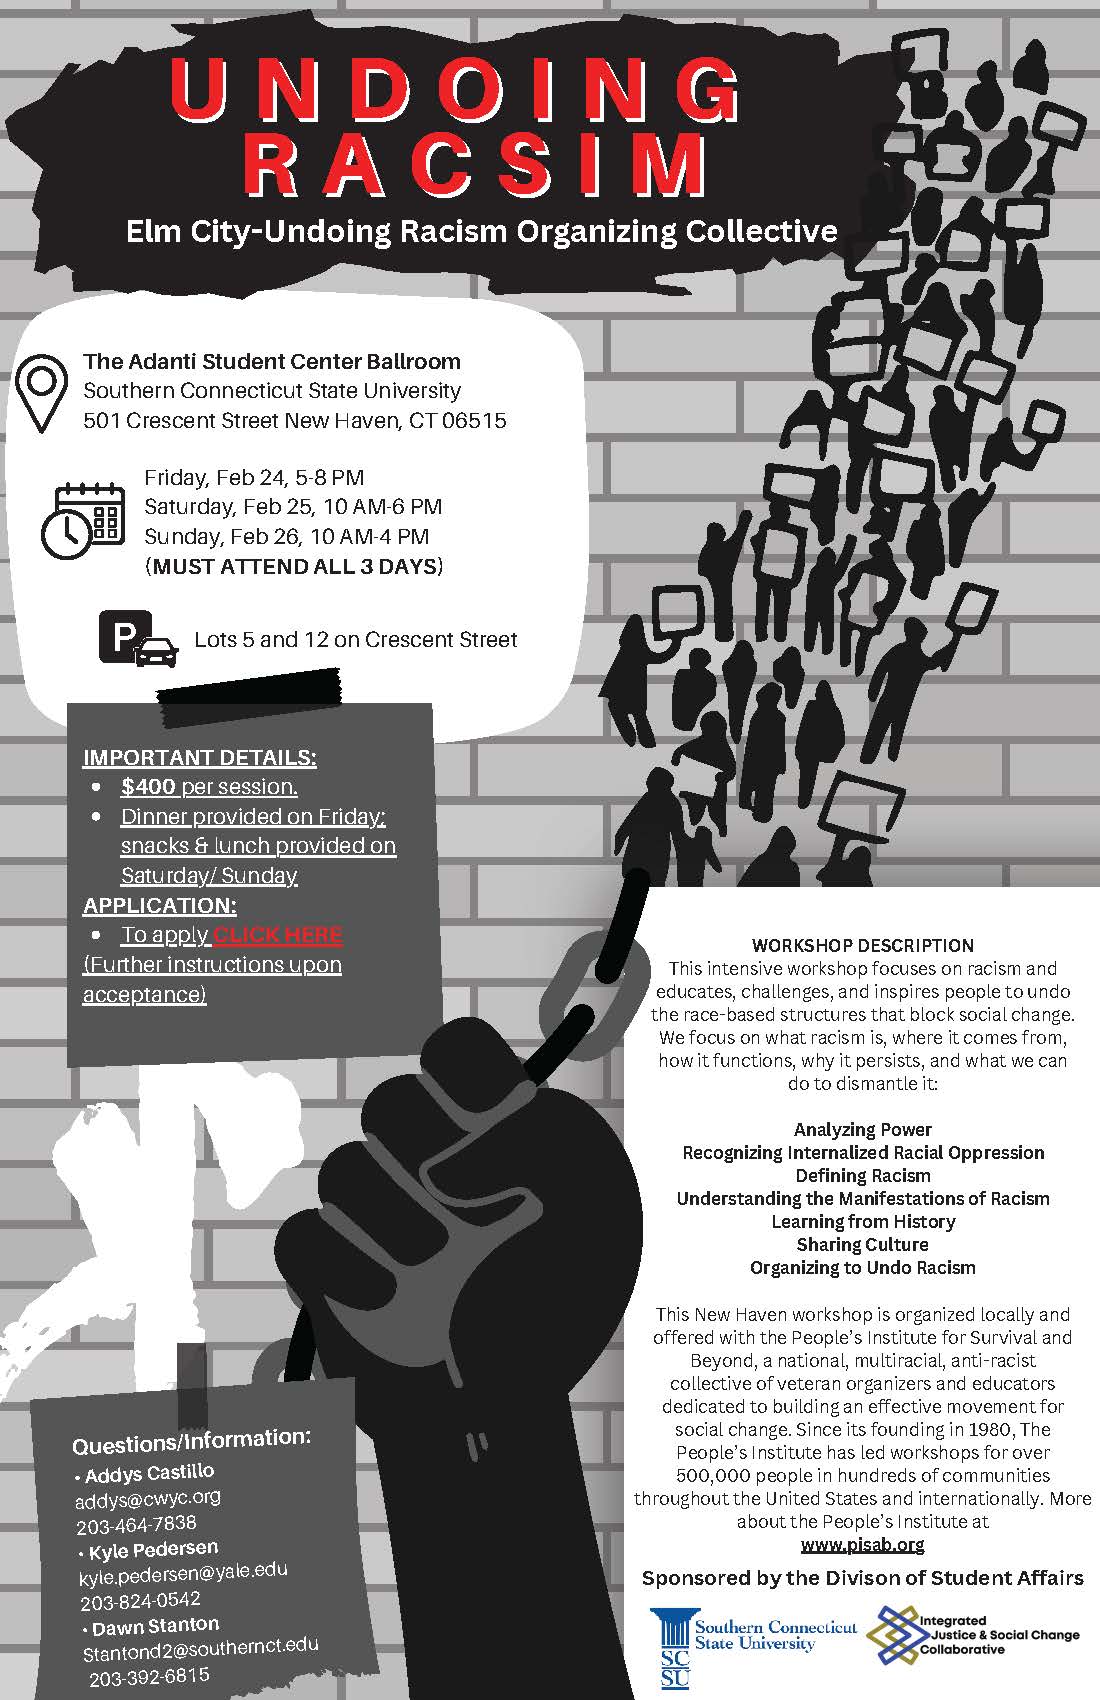 Flier advertising the Undoing Racism workshop Feb 24-26, 2023 at SCSU. With registration link.